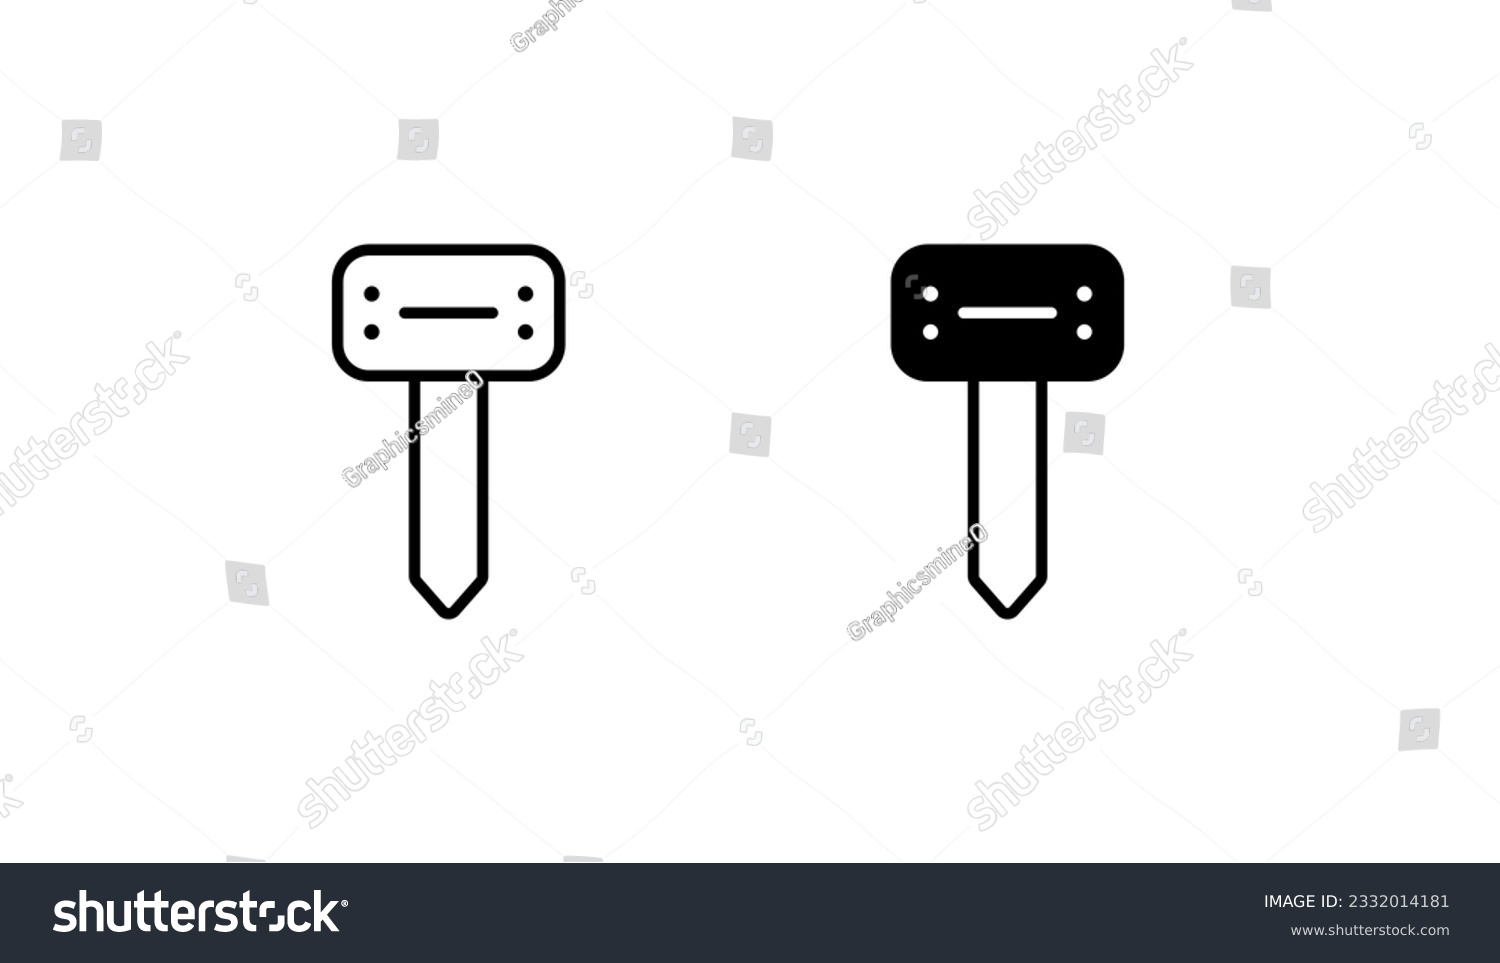 SVG of Boning Rod icon design with white background stock illustration svg